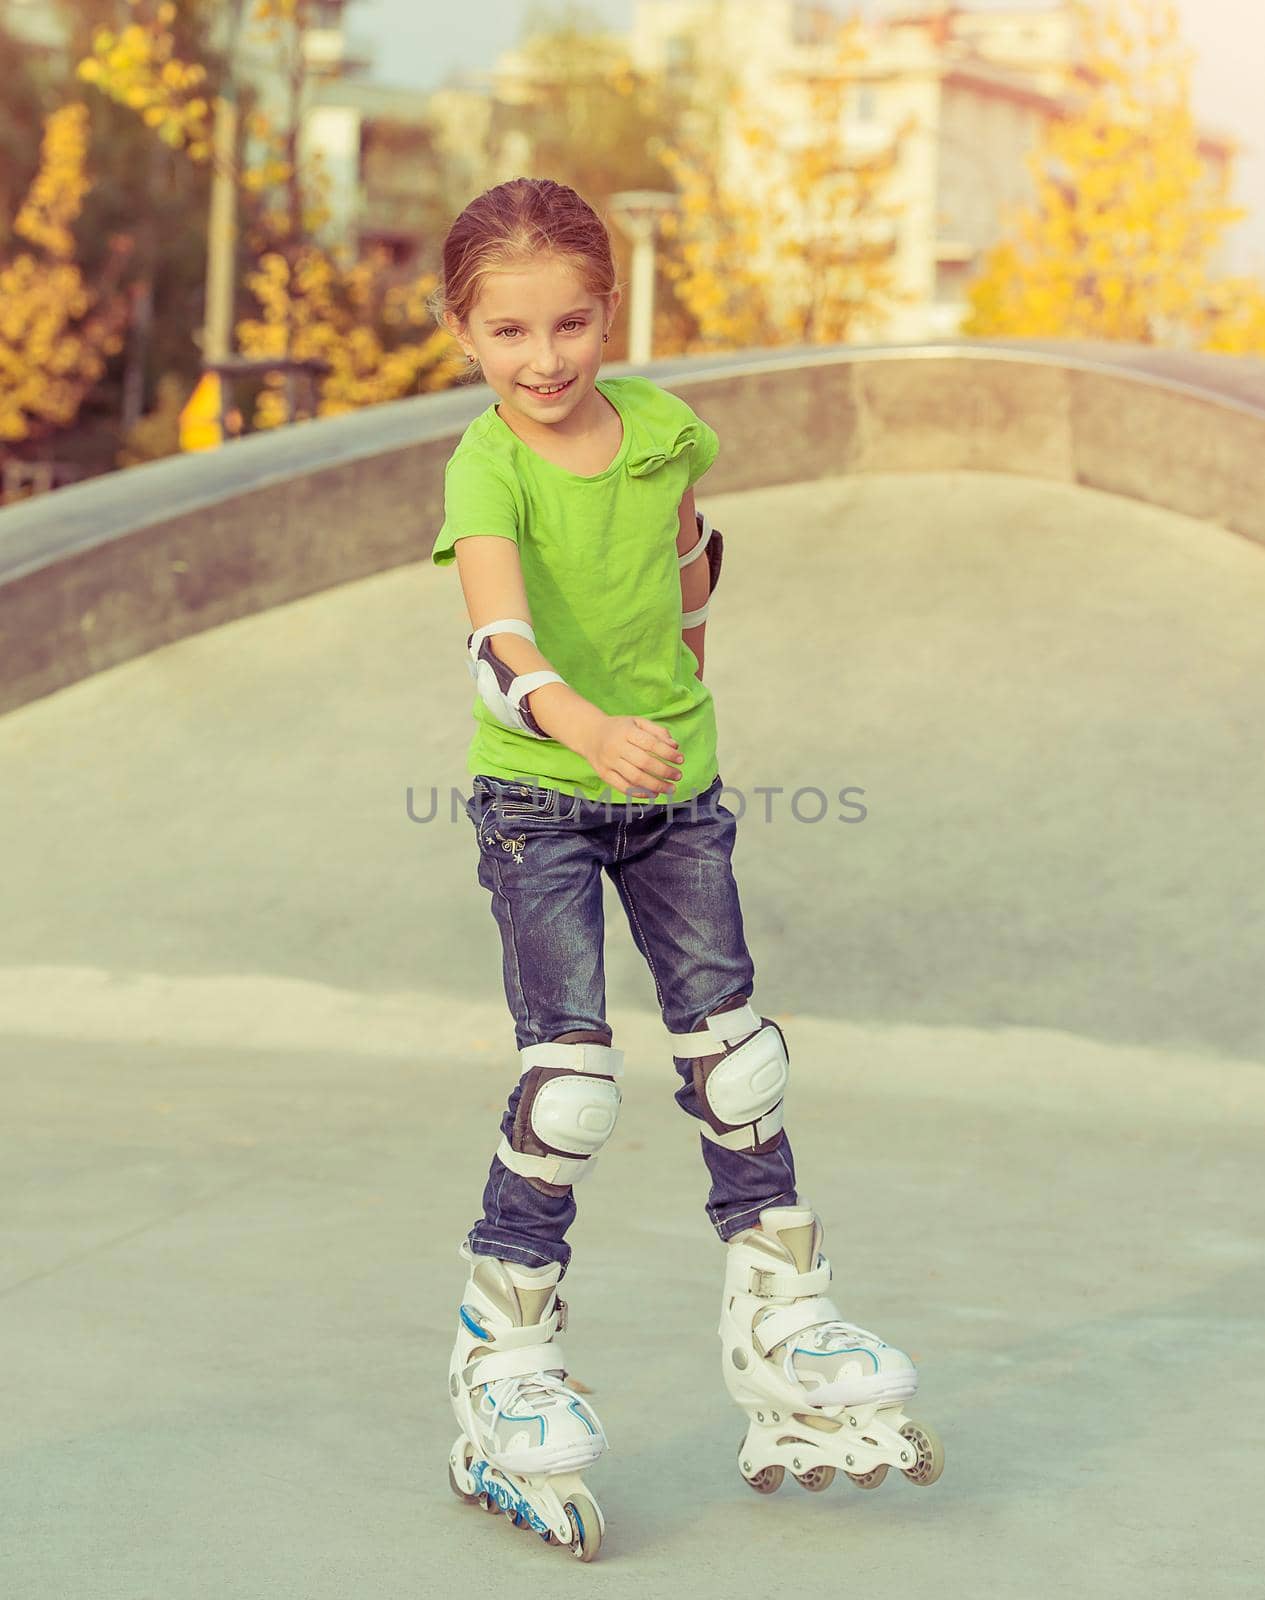 Cute little girl on roller skates at a park